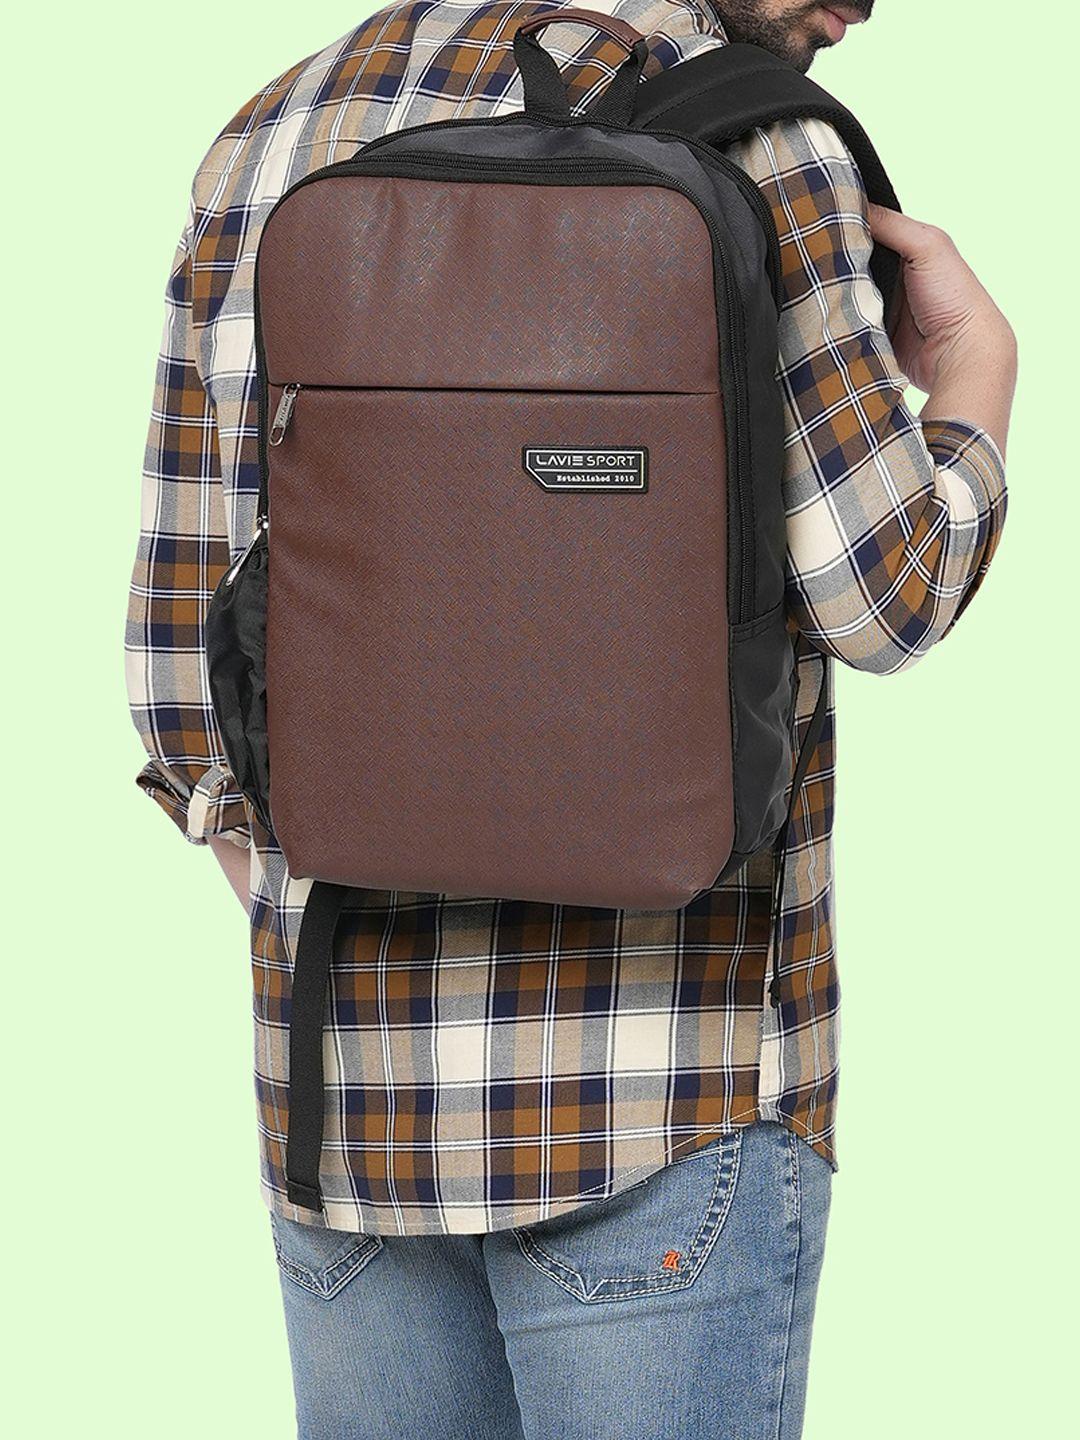 lavie-sport-chairman-men-brown-20l-15-inch-laptop-backpack